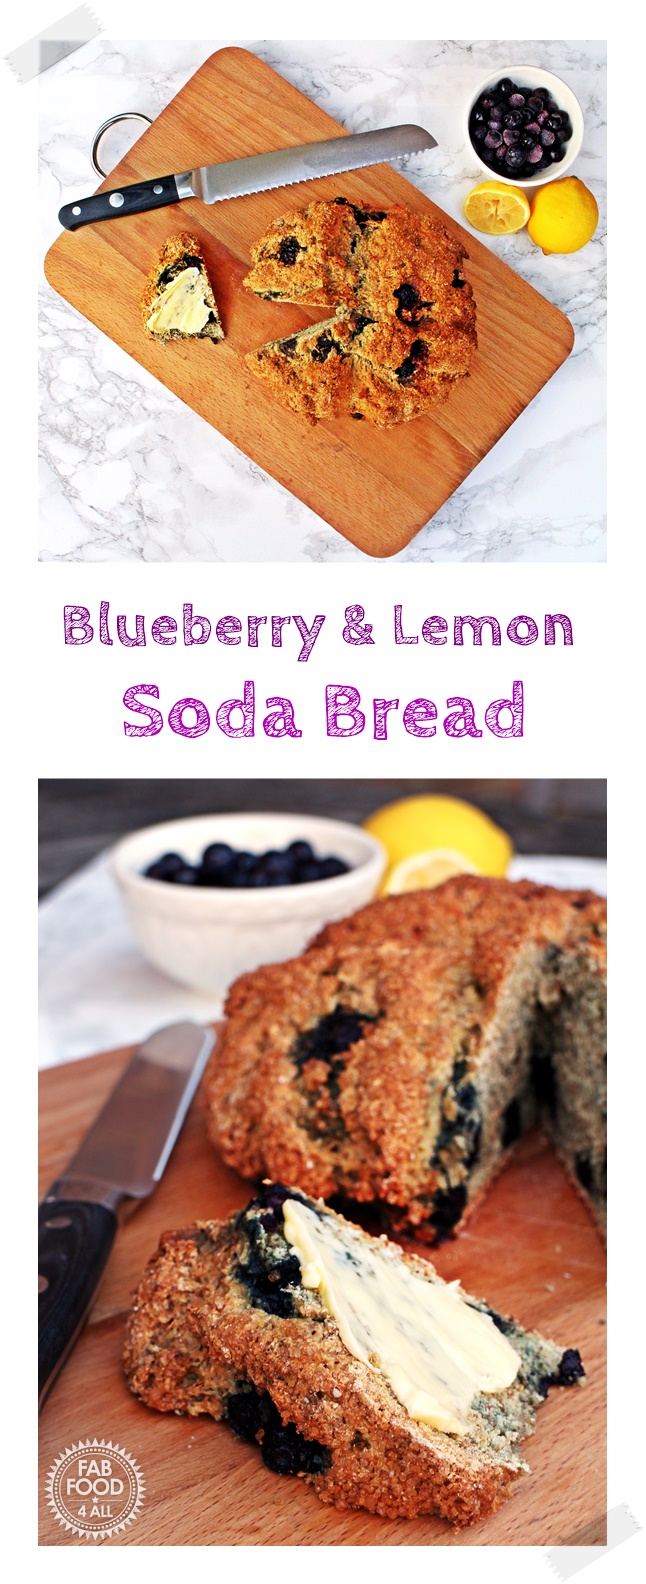 Blueberry & Lemon Soda Bread @Fabfood4All